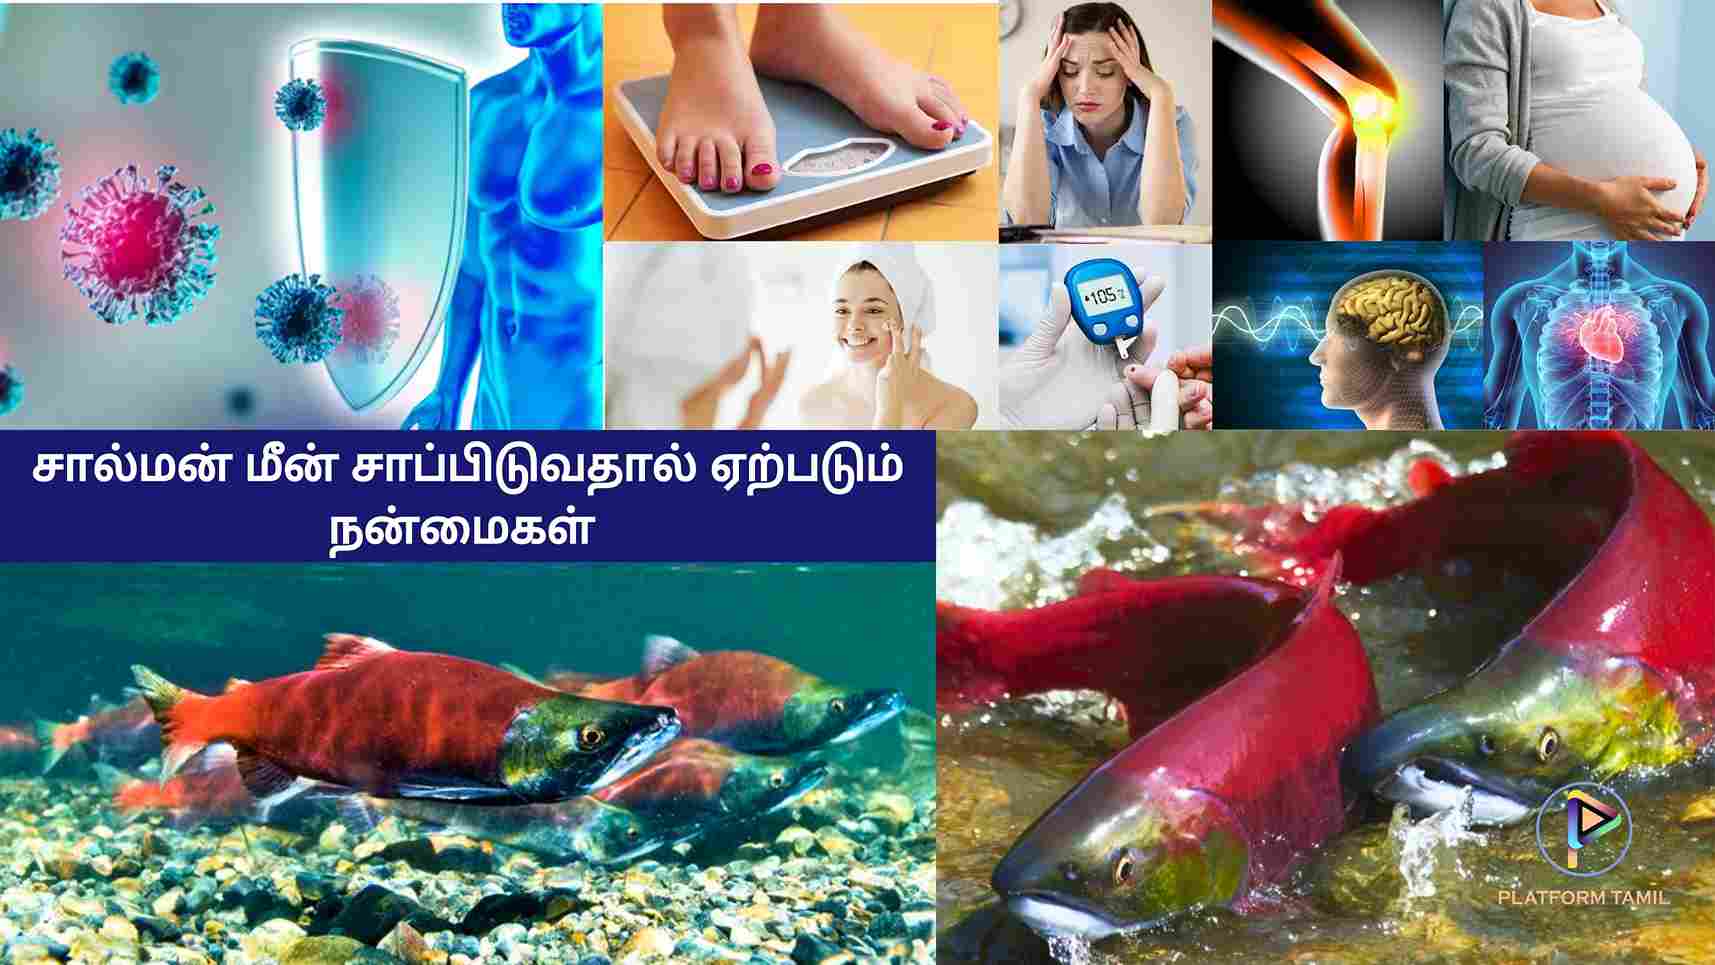 Salmon Fish in Tamil: சால்மன் மீன் - Platform Tamil